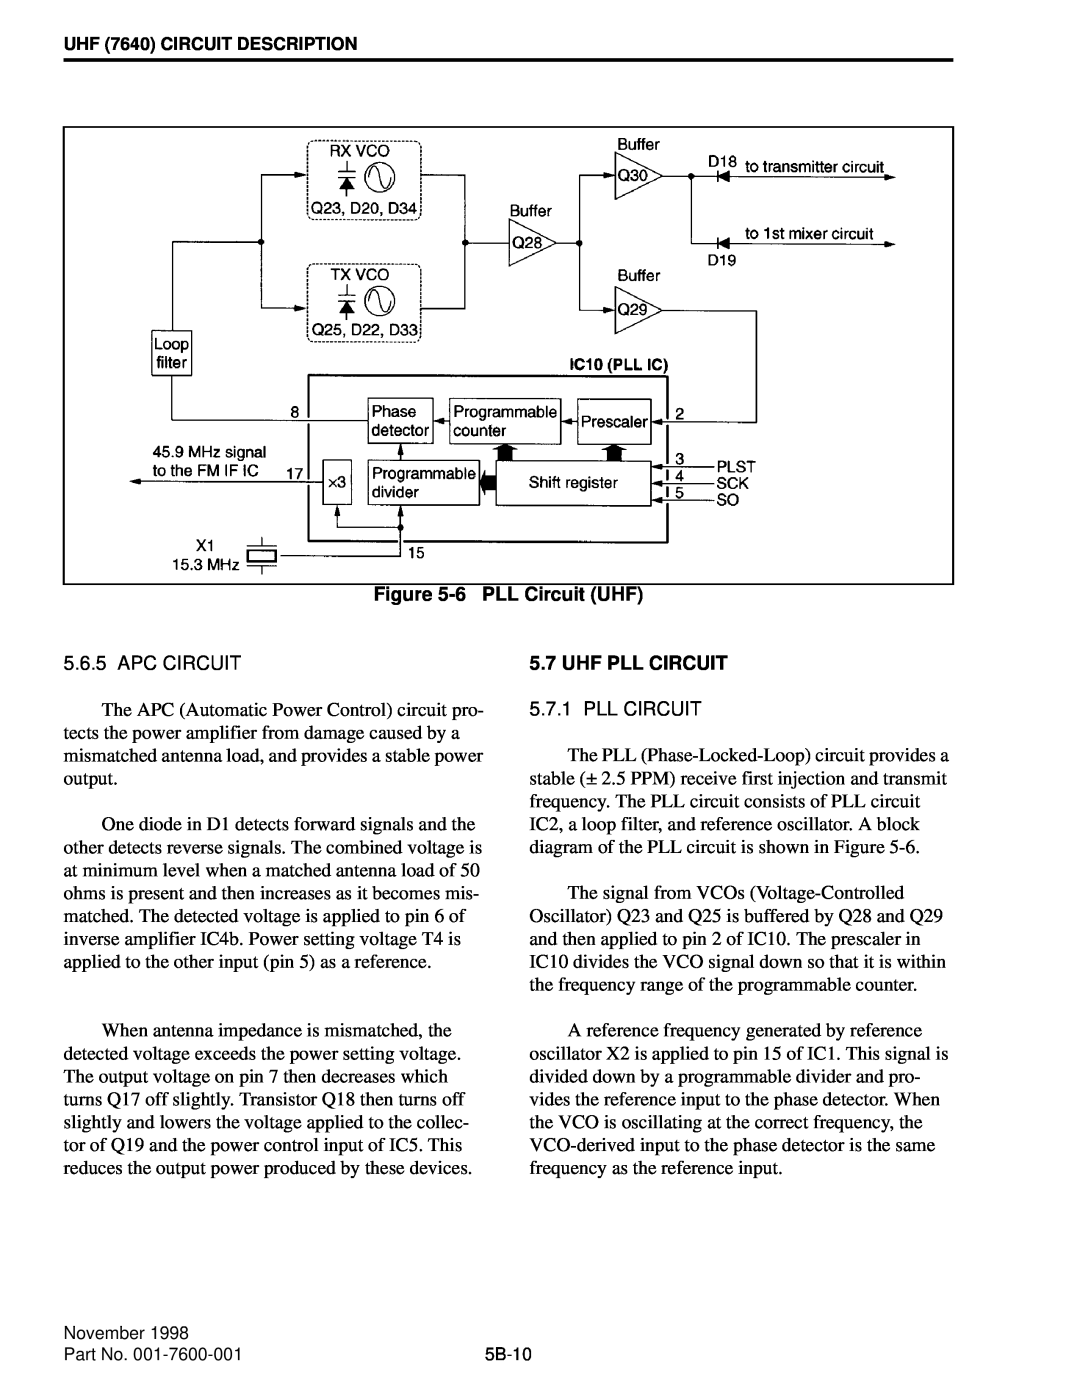 EFJohnson 761X, 764X service manual 6PLL Circuit UHF, Uhf Pll Circuit 